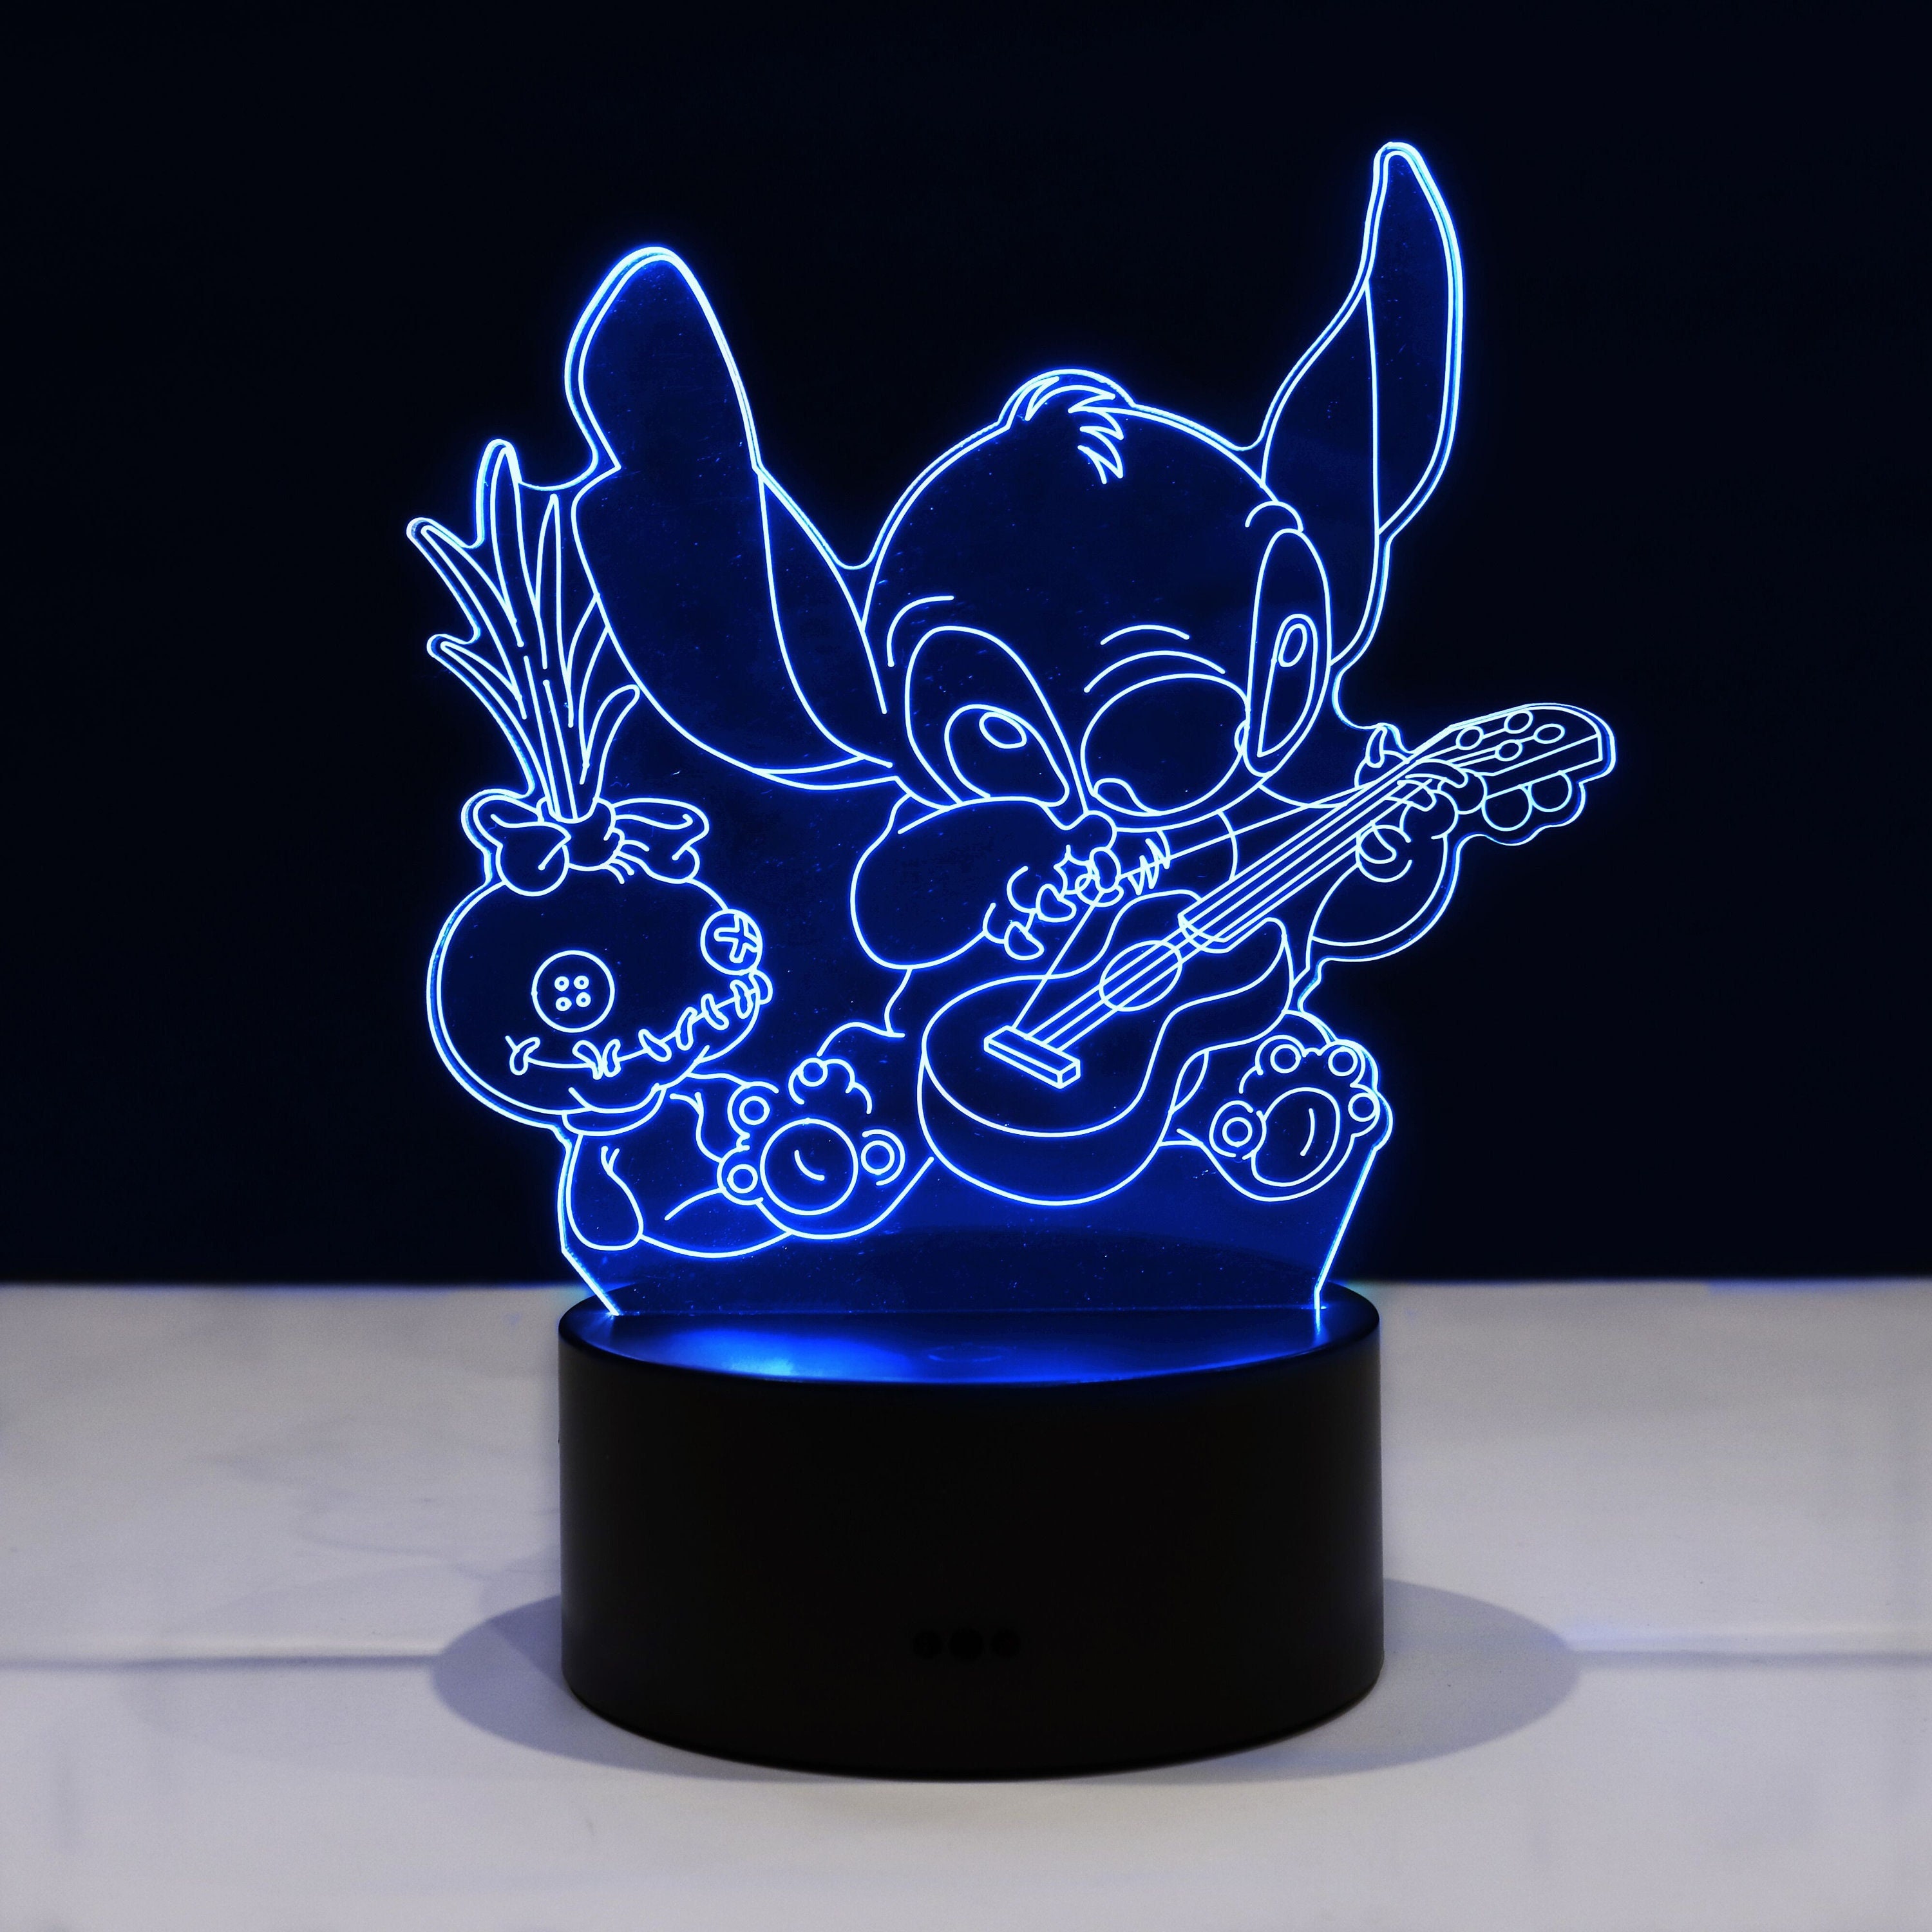 LILO AND STITCH LED LIGHT Vinyl Record Wall Clock Wonderful Handmade Gift Amazing Home Décor Night Light Night Lamp 